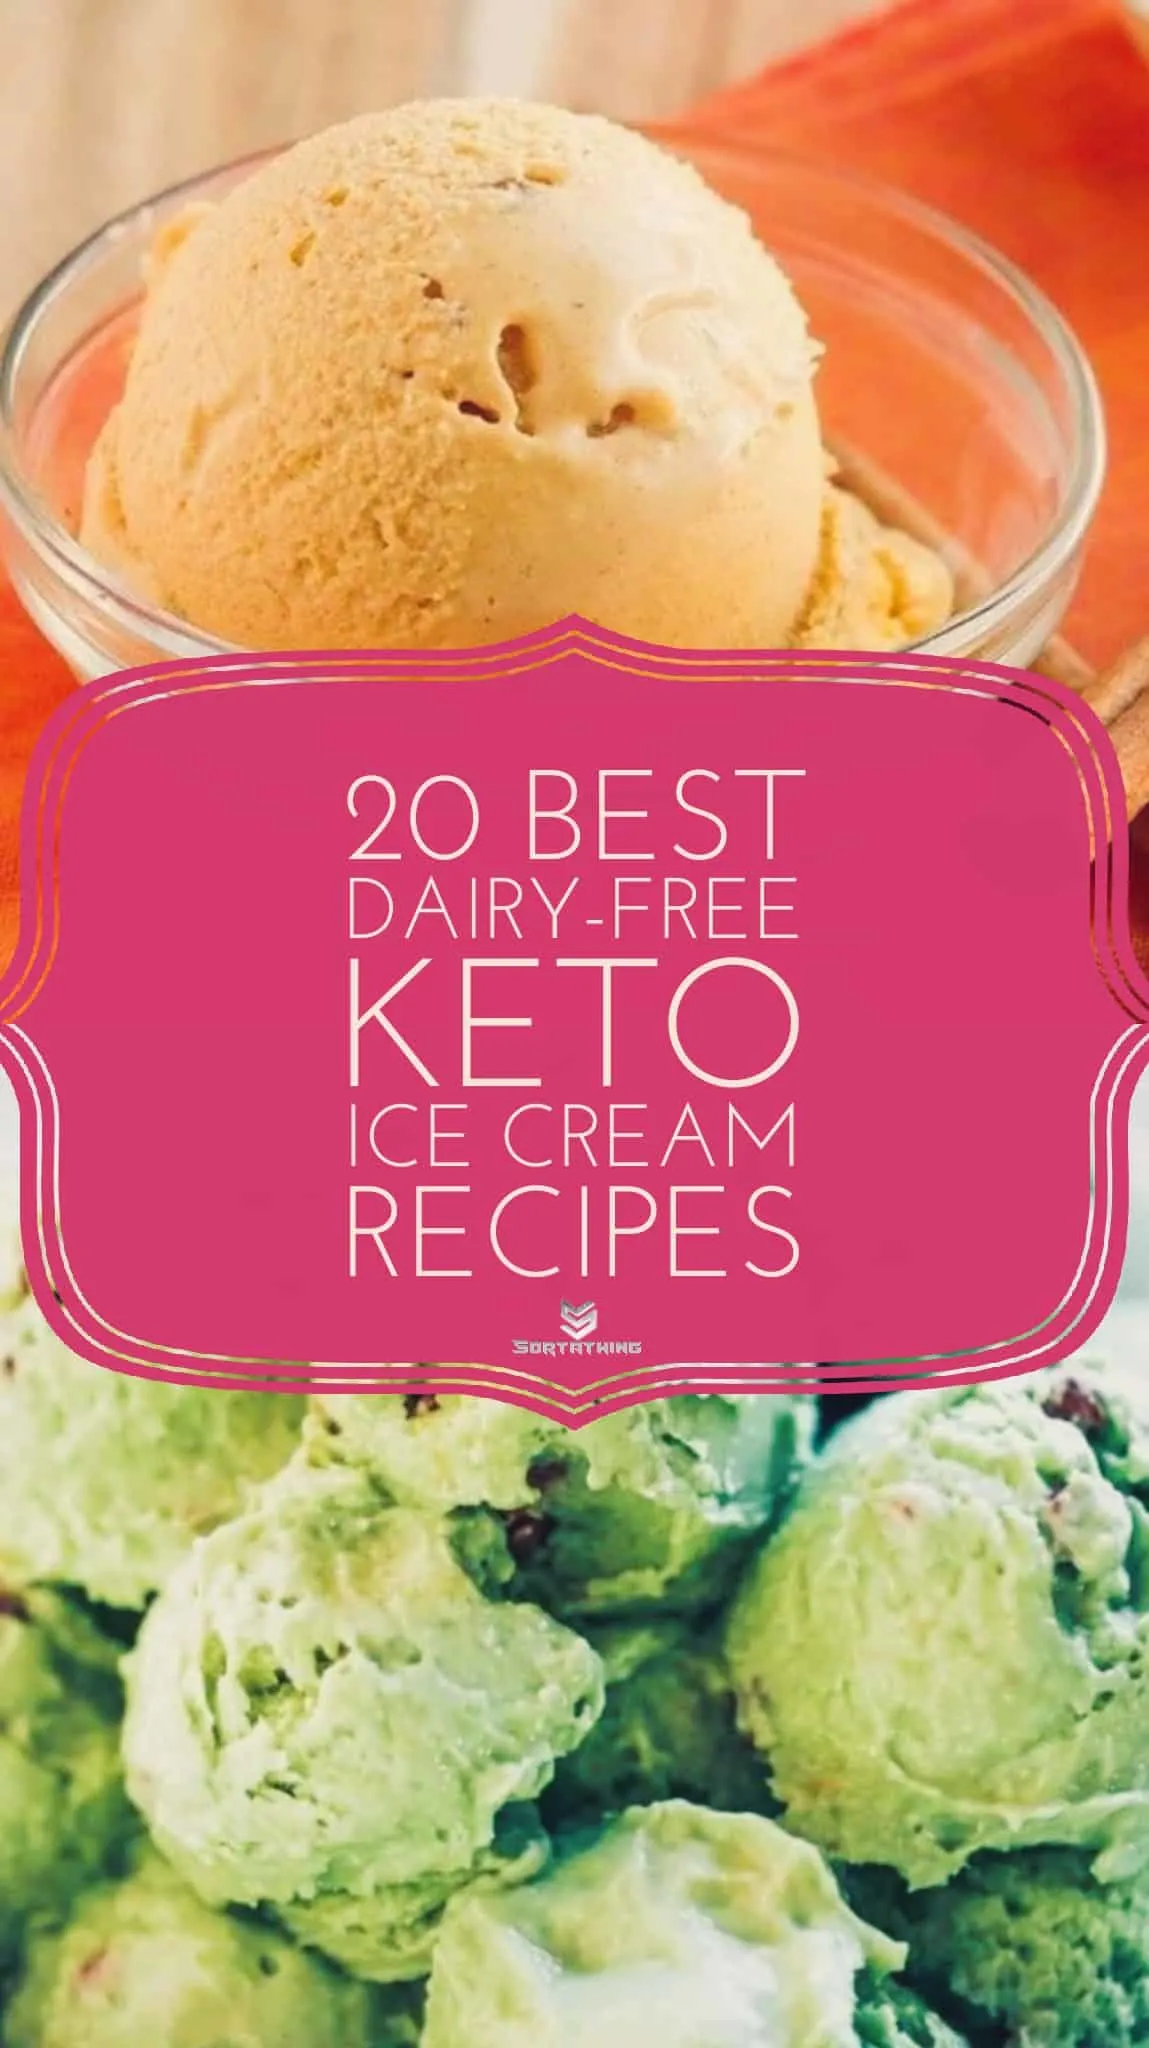 20 Best Keto Dairy Free Ice Cream Recipes 1 - Sortathing Food & Health